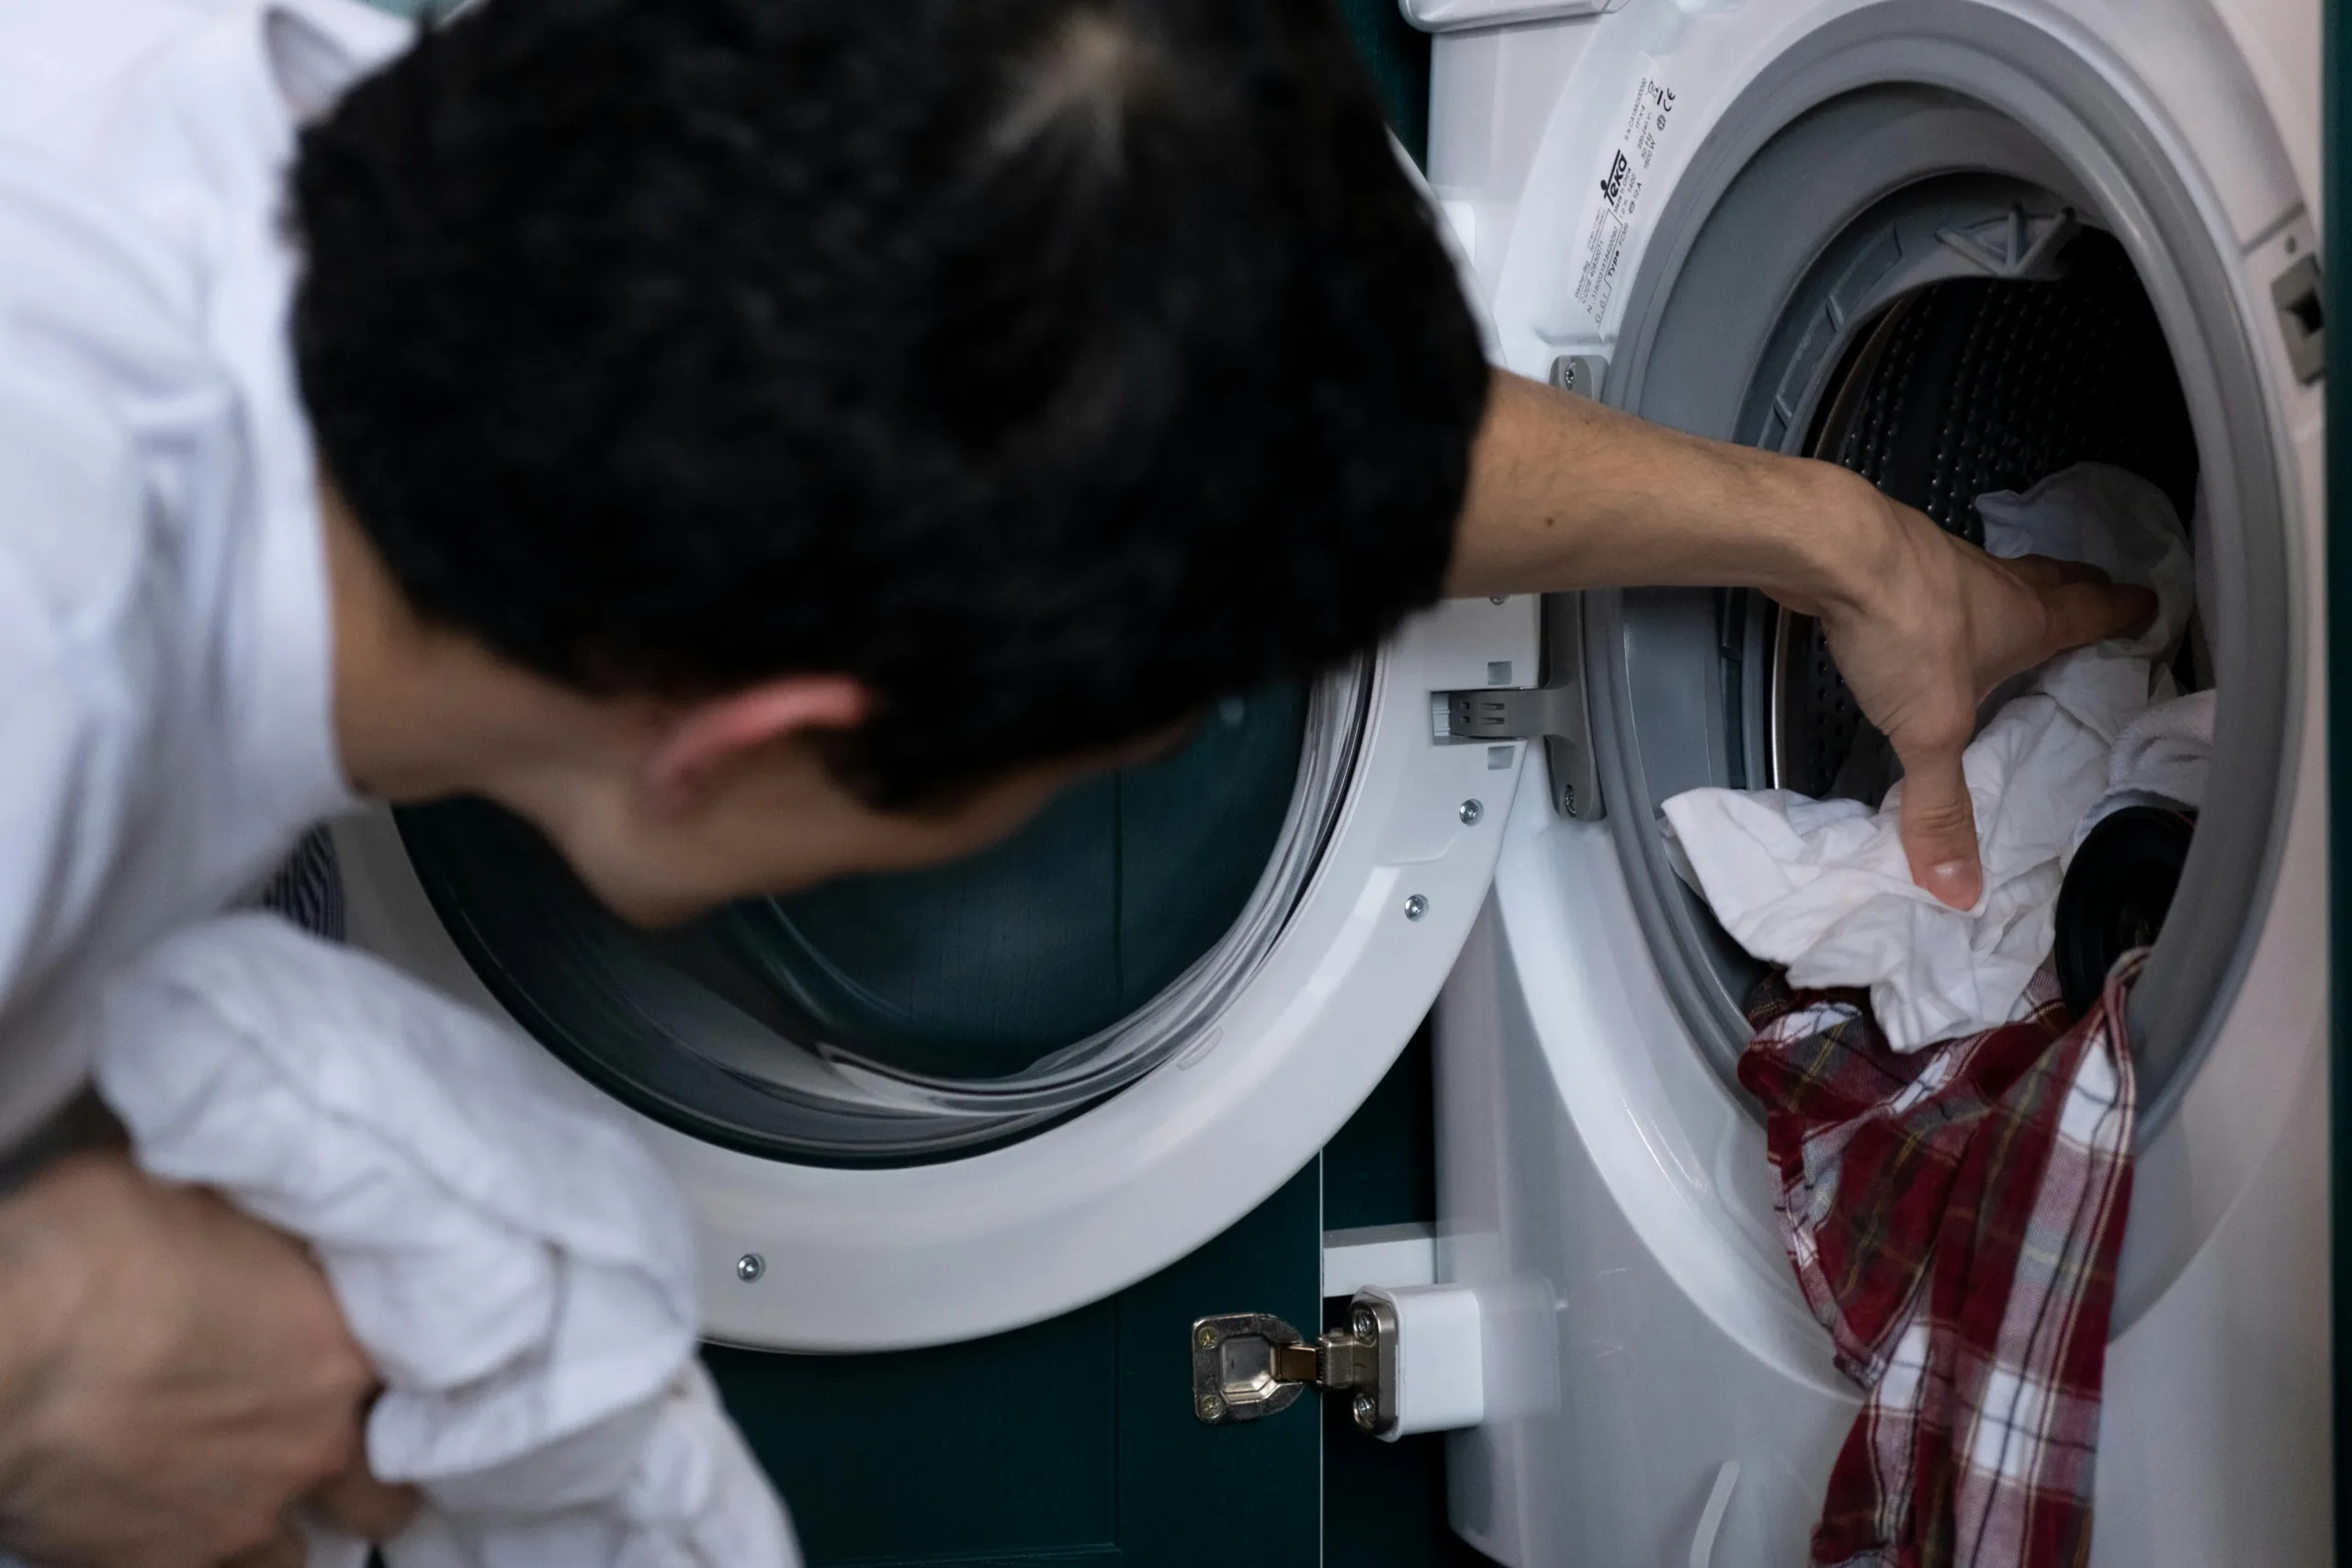 Man getting laundry from washing machine